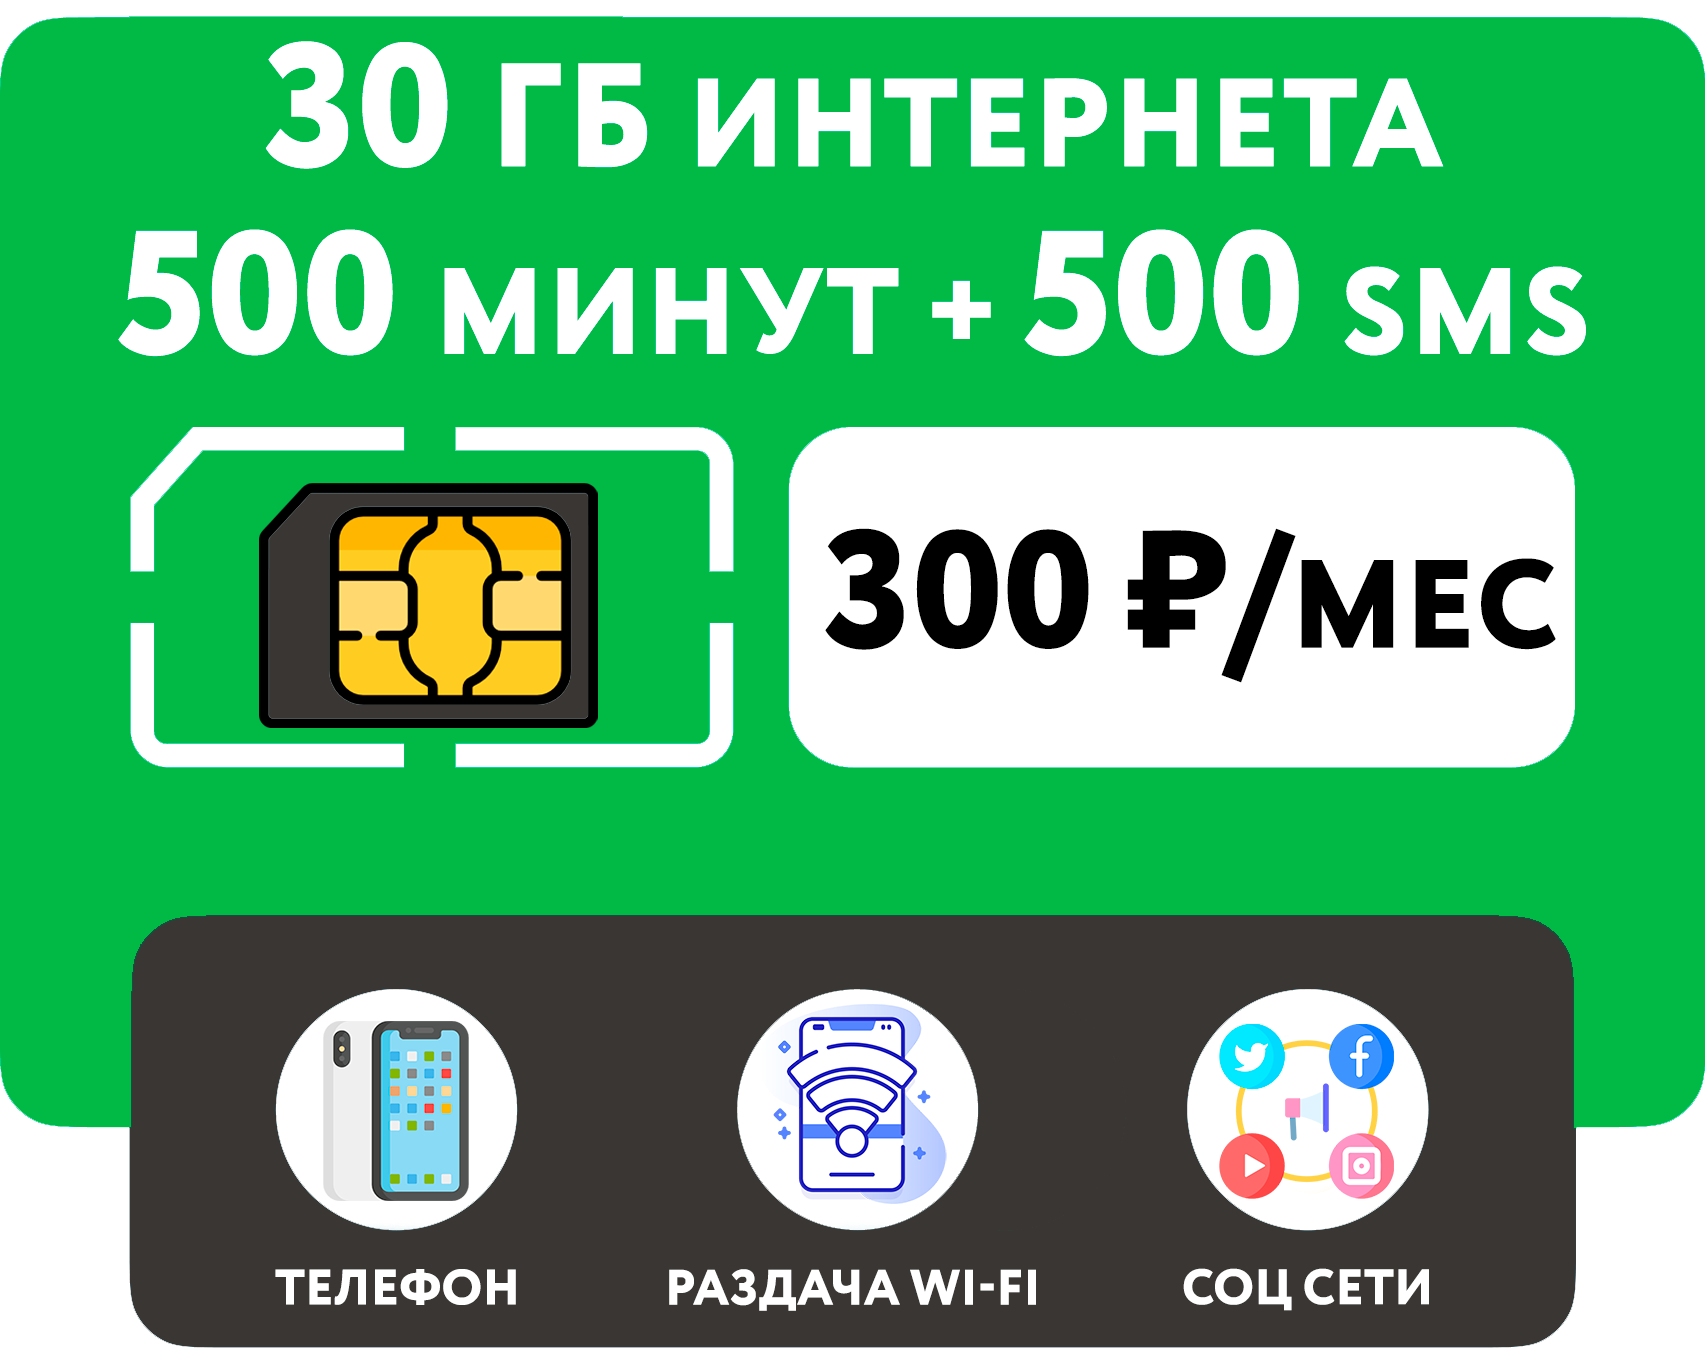 SIM-карта 500 минут + 20 гб интернета 3G/4G + 500 СМС за 300 руб/мес (смартфон) + безлимит на мессенджеры (Кавказский филиал)